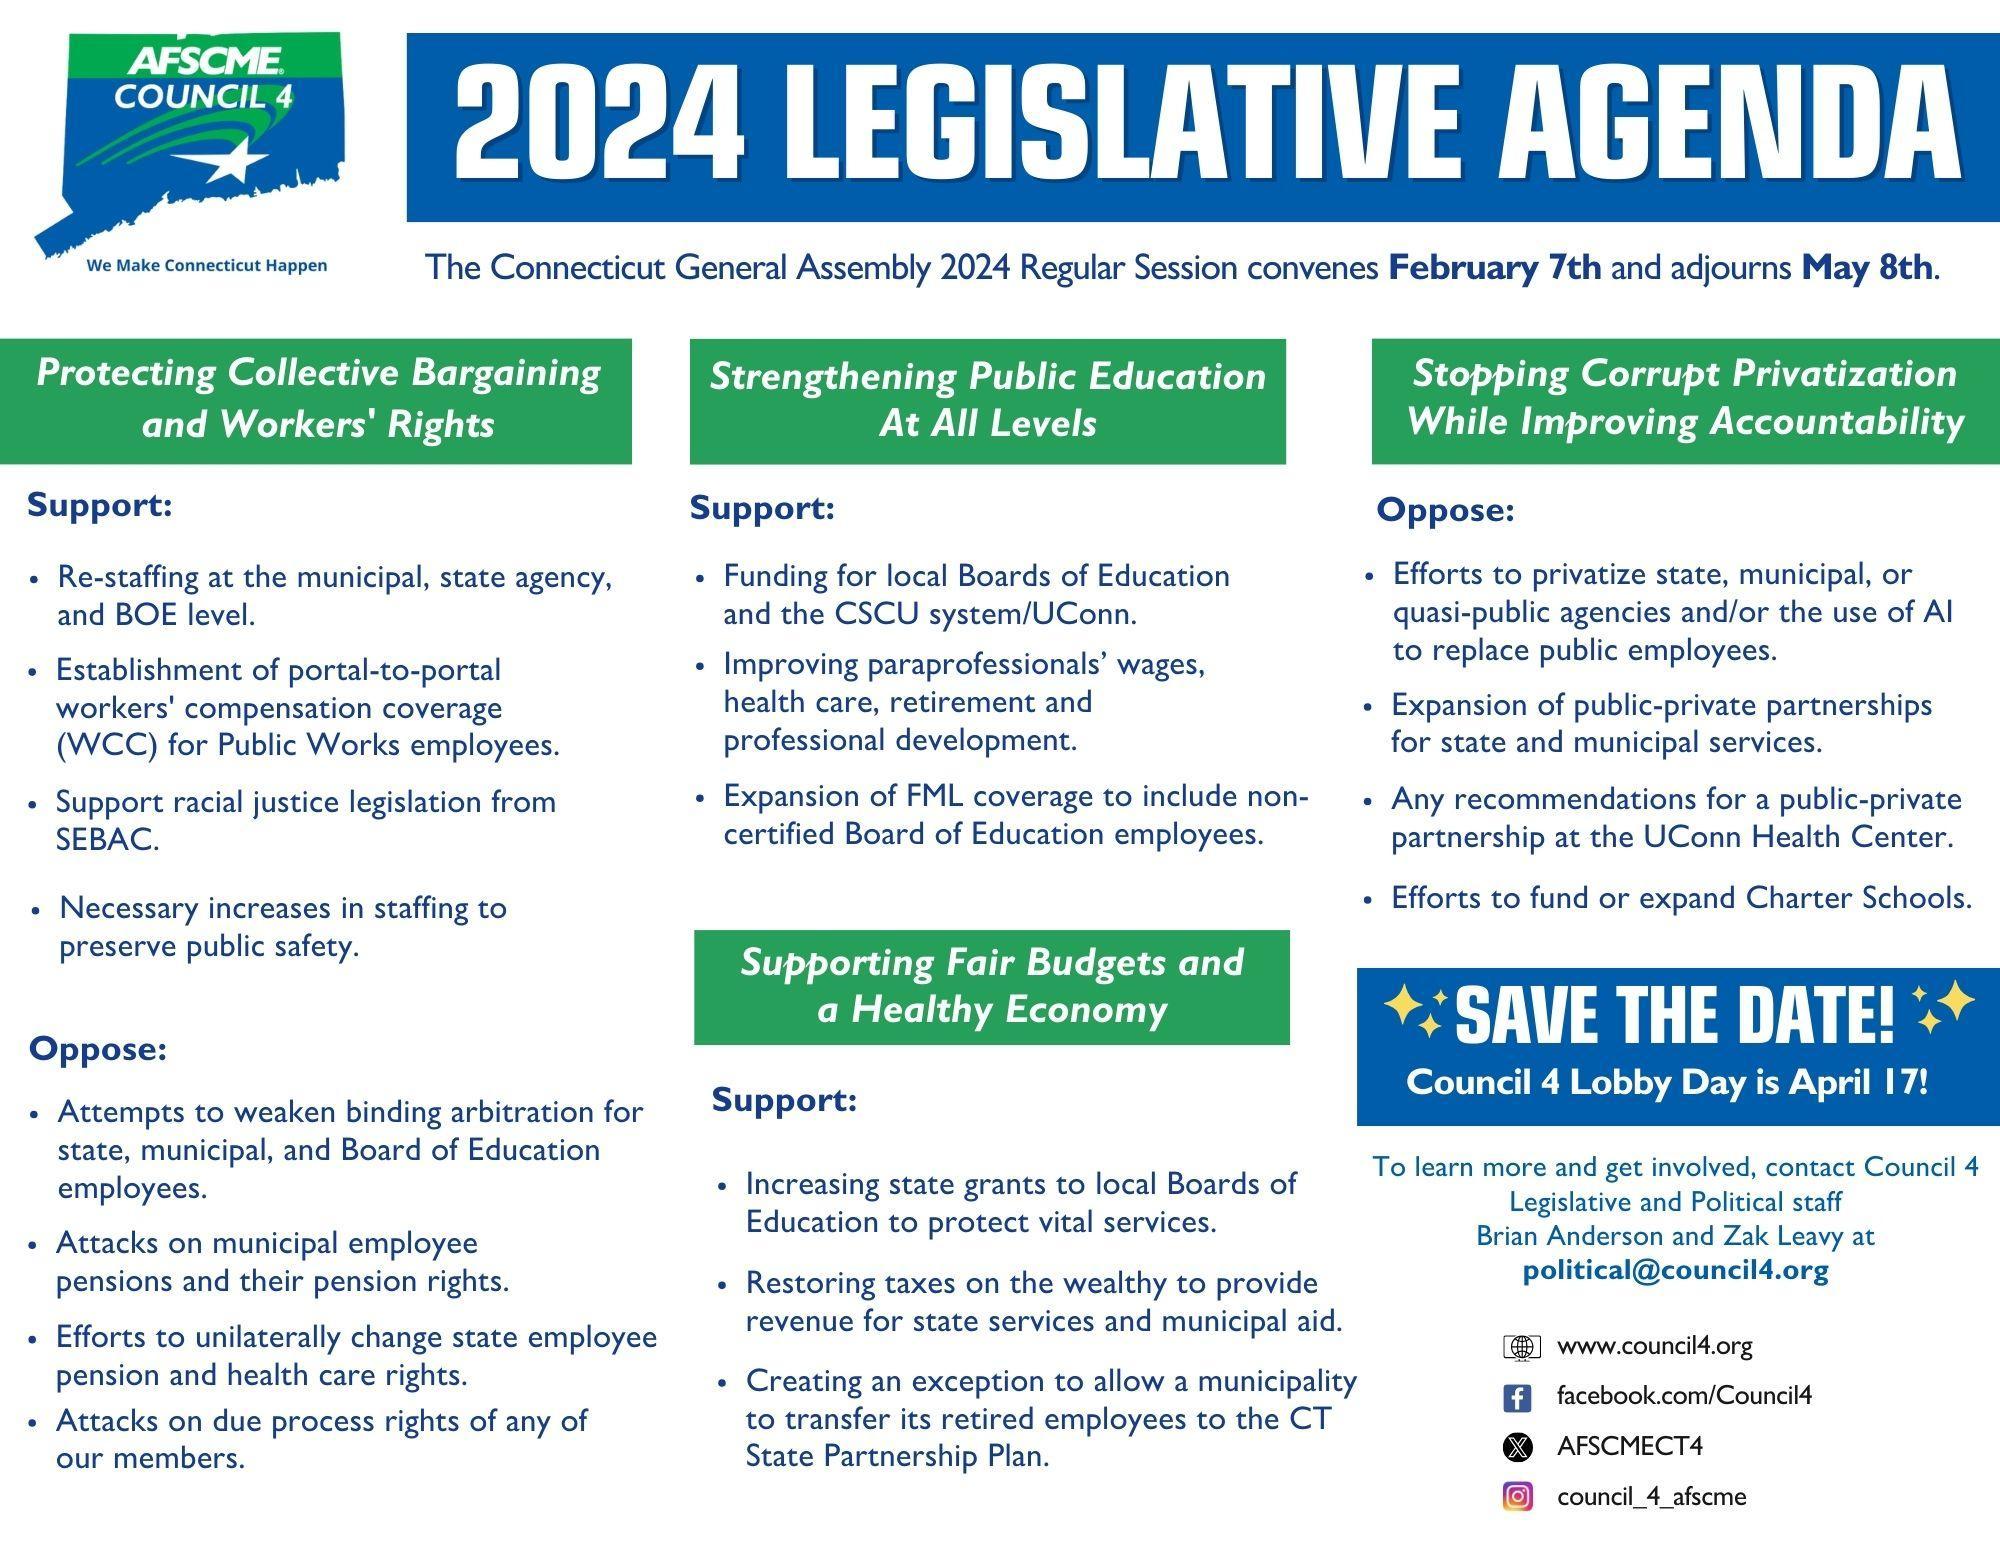 2024 Council 4 Legislative Agenda